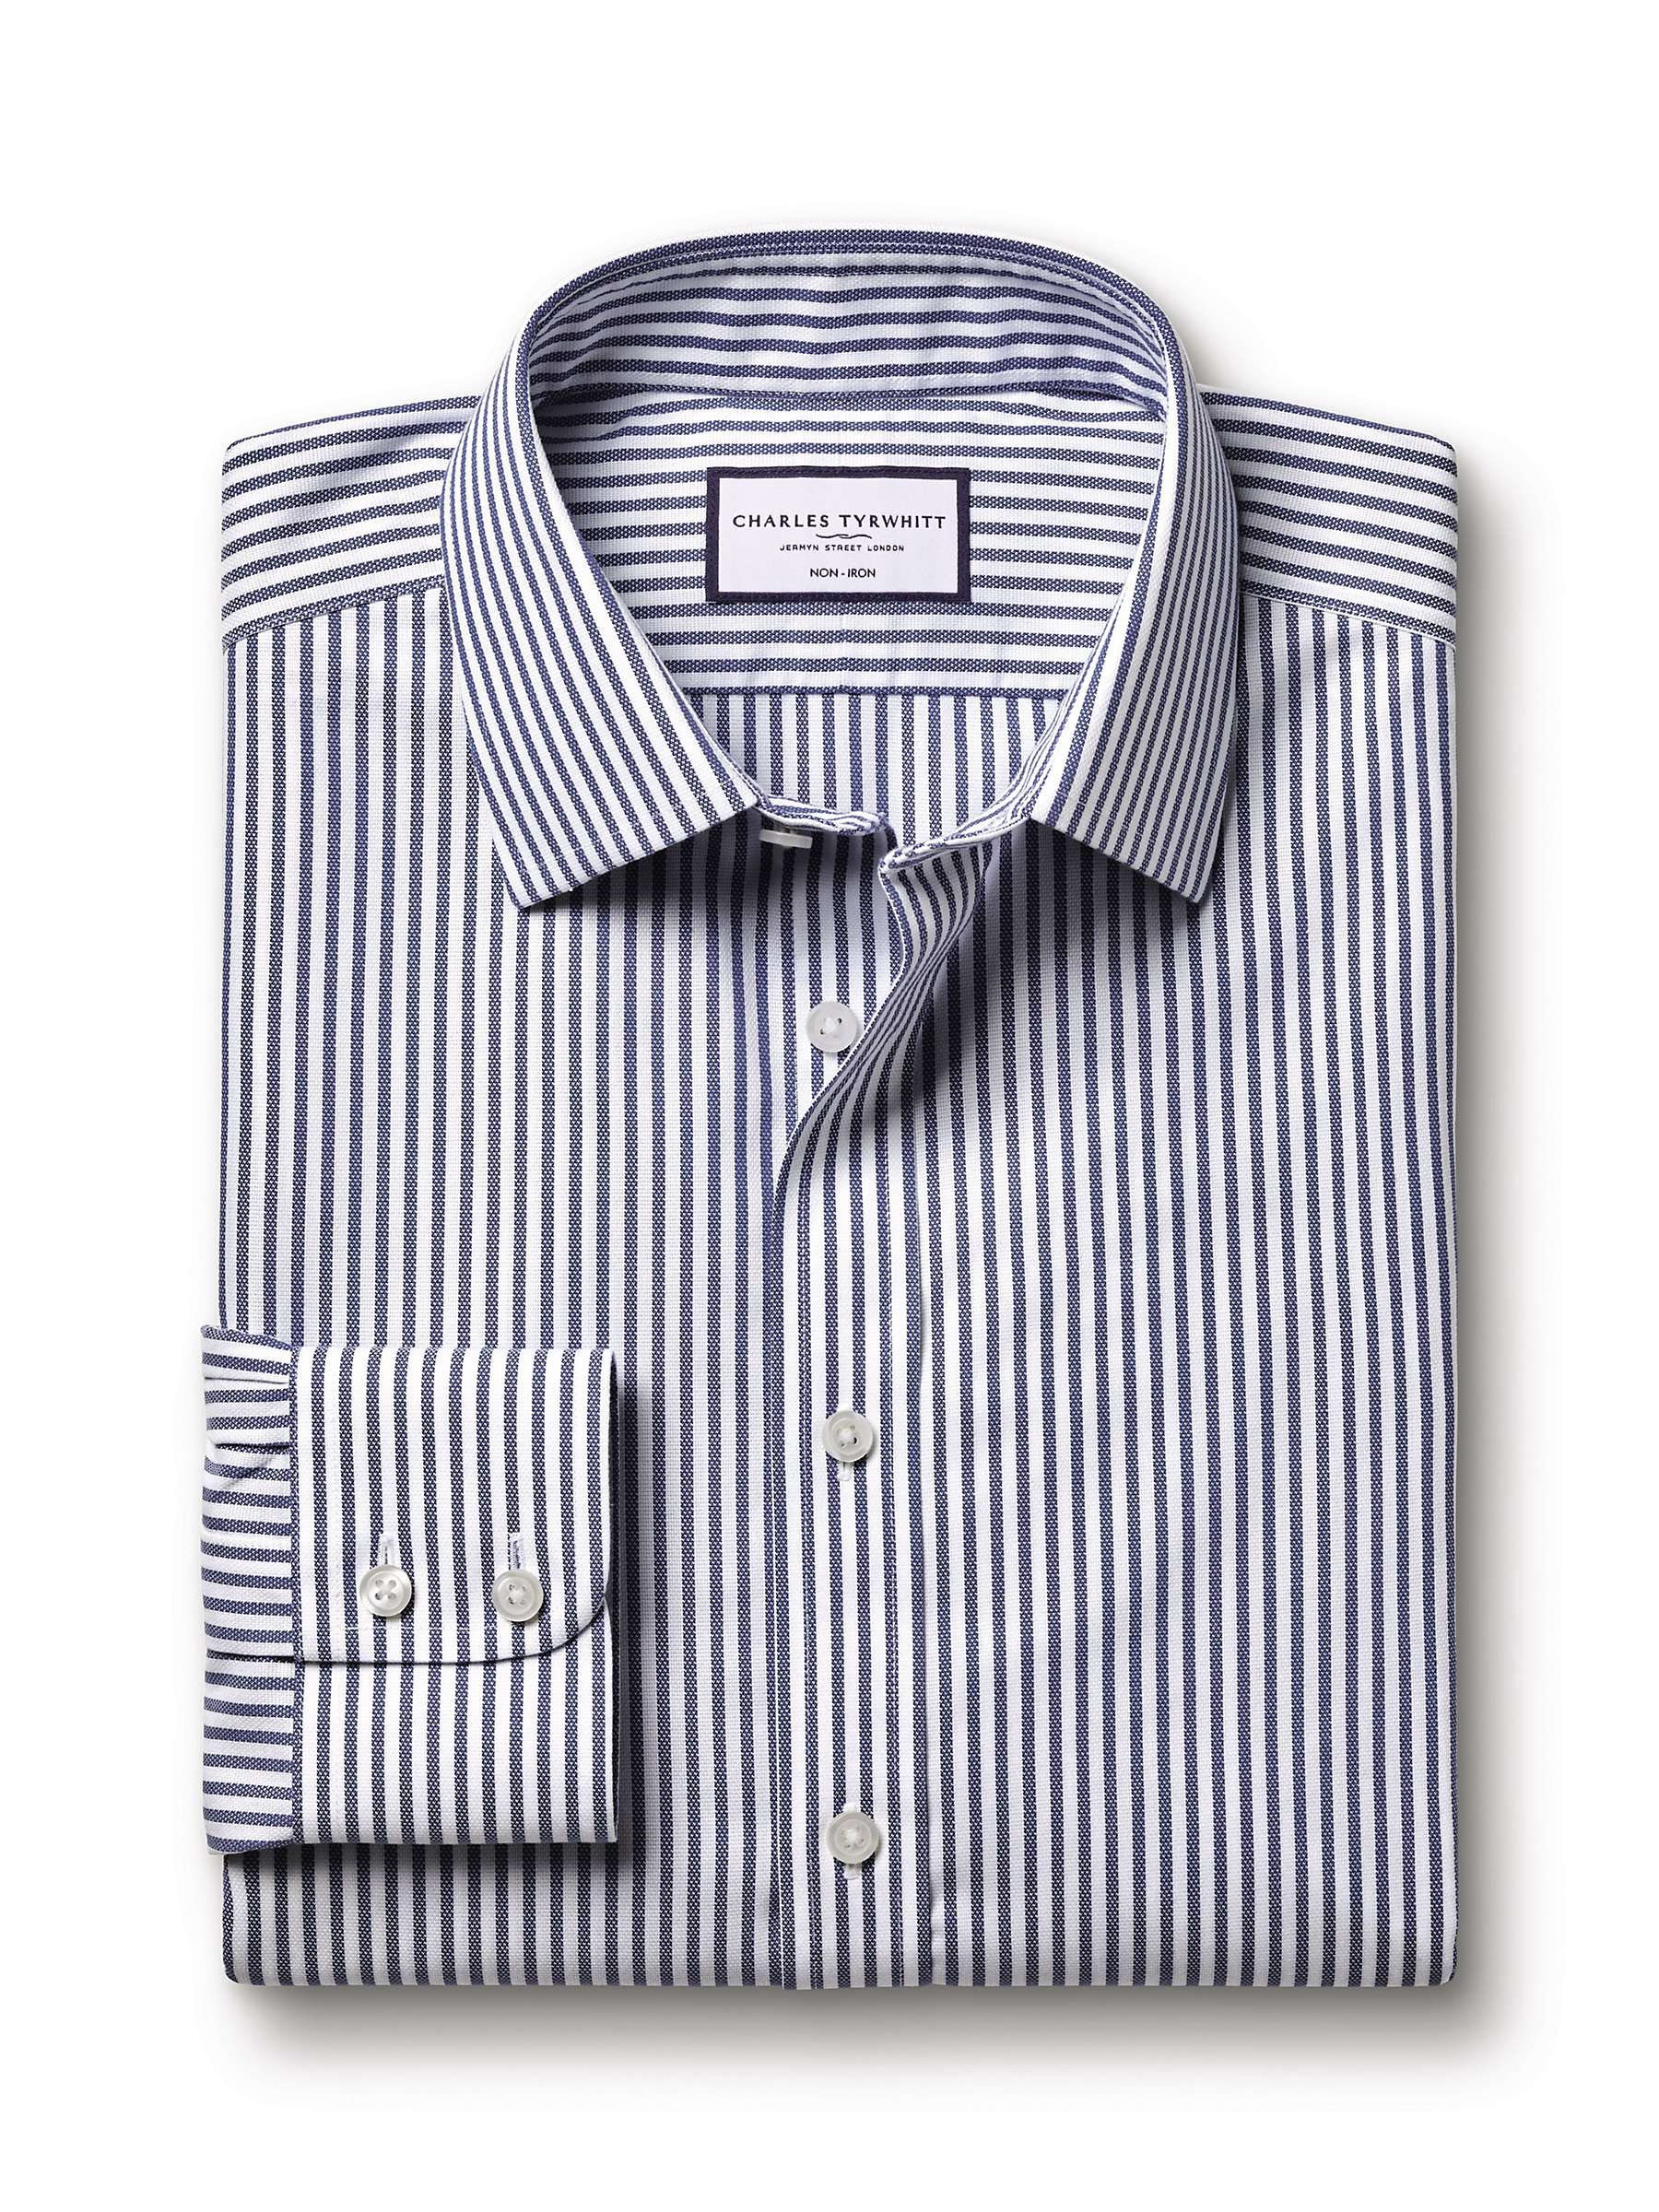 Buy Charles Tyrwhitt Non-Iron Stripe Royal Oxford Shirt Online at johnlewis.com